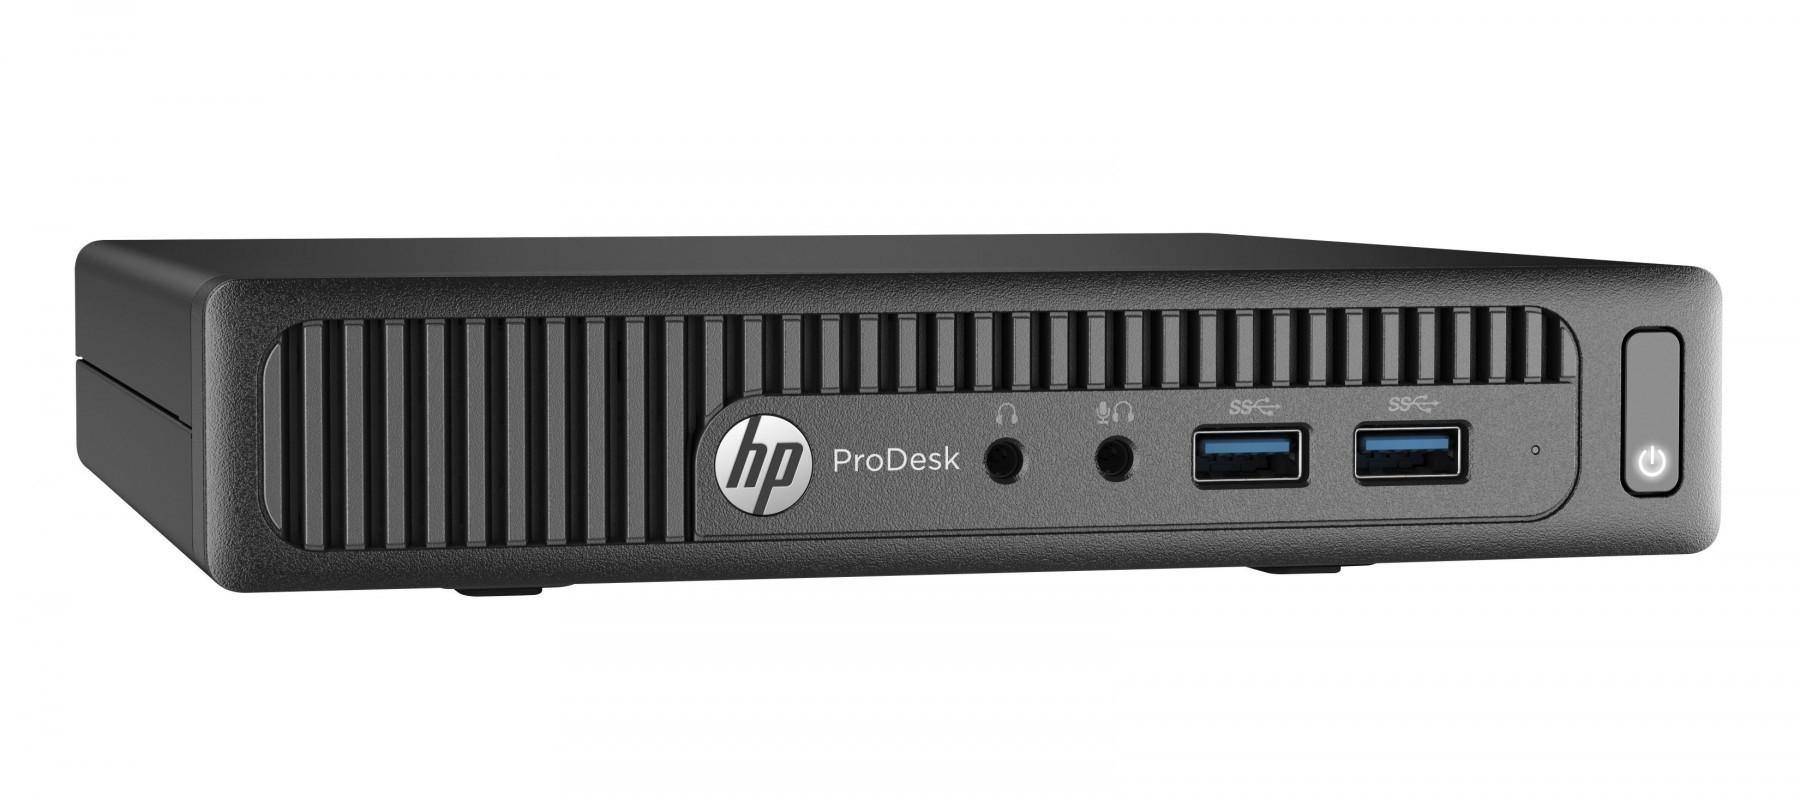 HP ProDesk 400 G2 Mini Desktop PC | Configure To Order